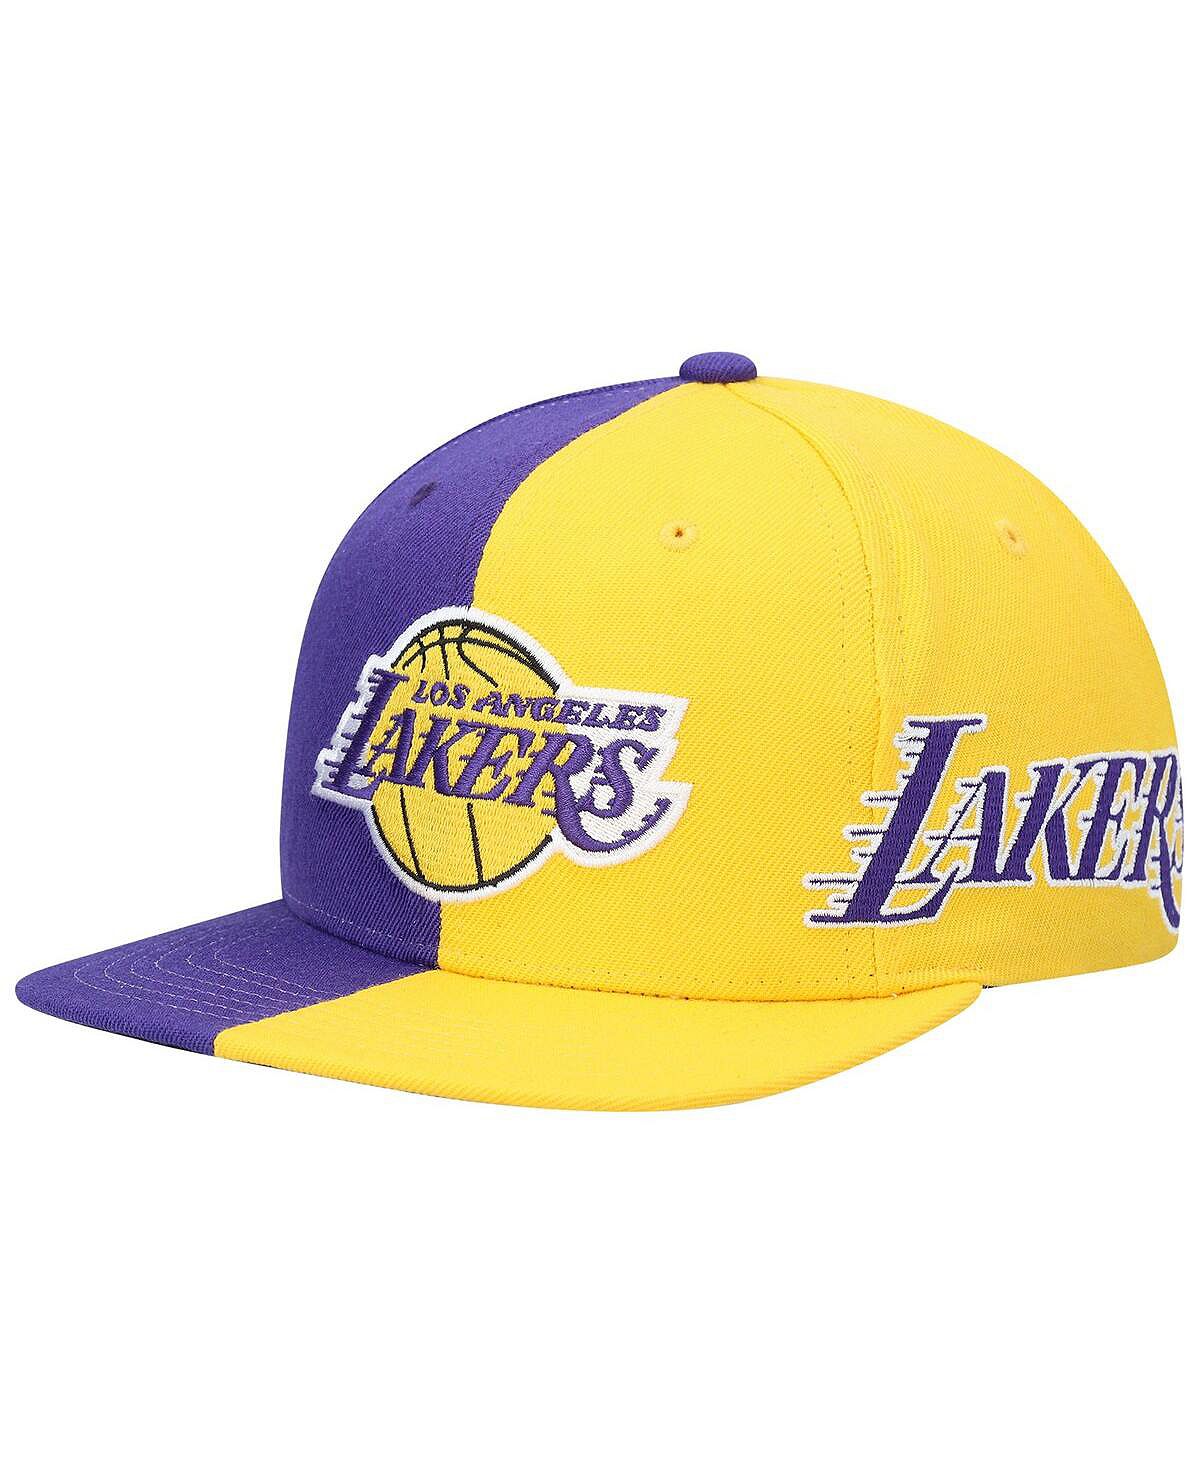 Мужская фиолетово-золотая кепка Los Angeles Lakers Team Half and Half Snapback Mitchell & Ness